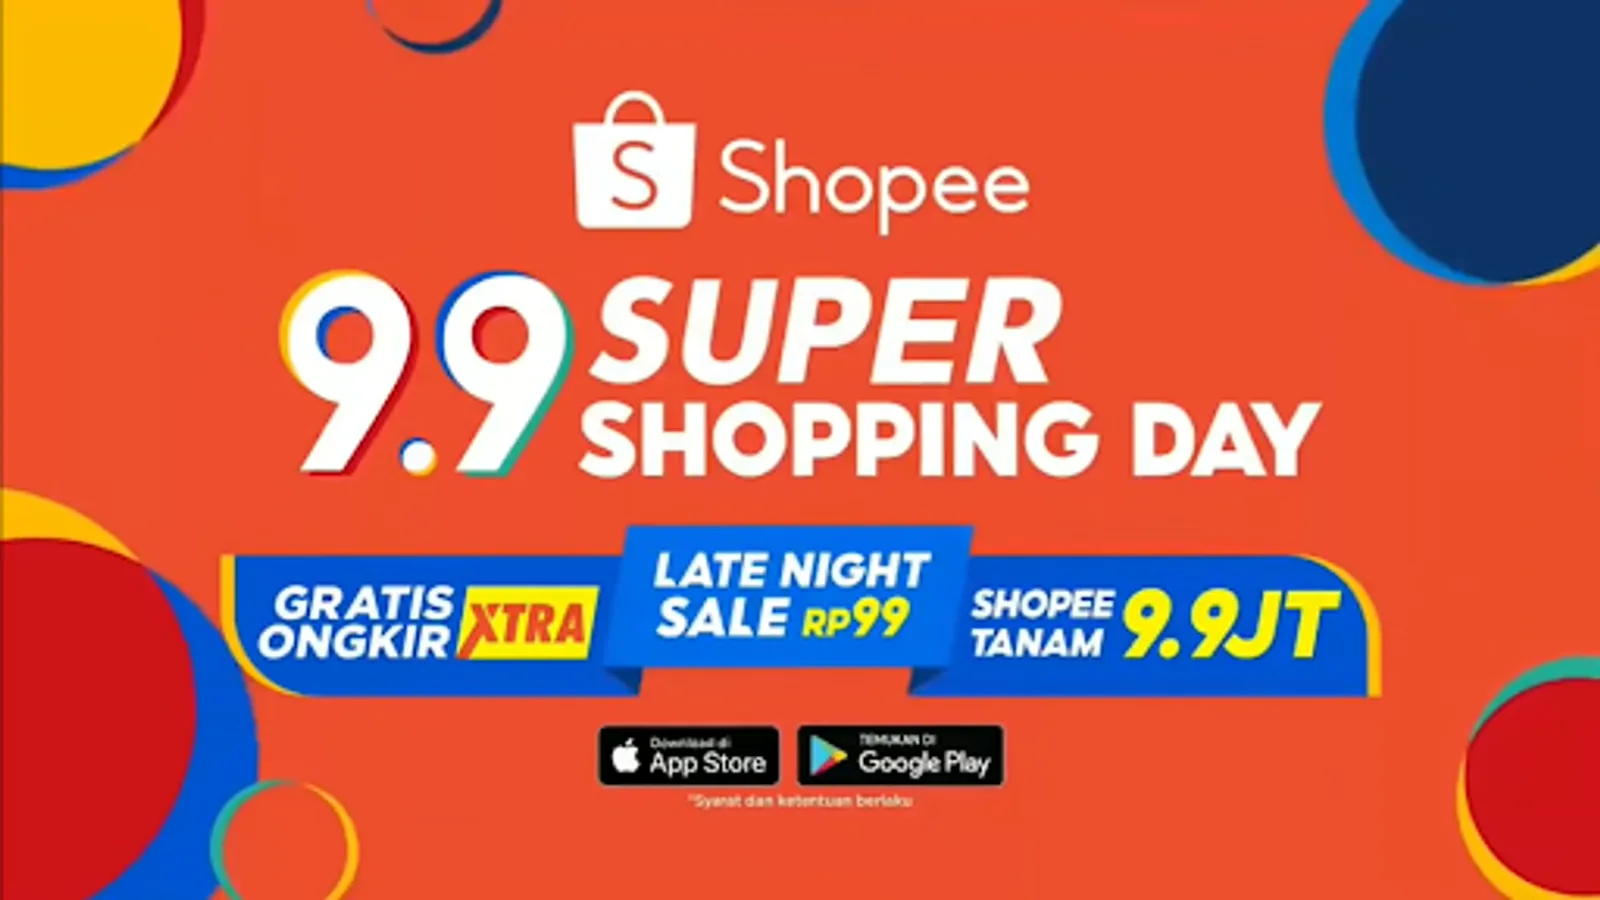 Saksikan Penampilan GFRIEND di TV Show Shopee 9.9 Super Shopping Day! 